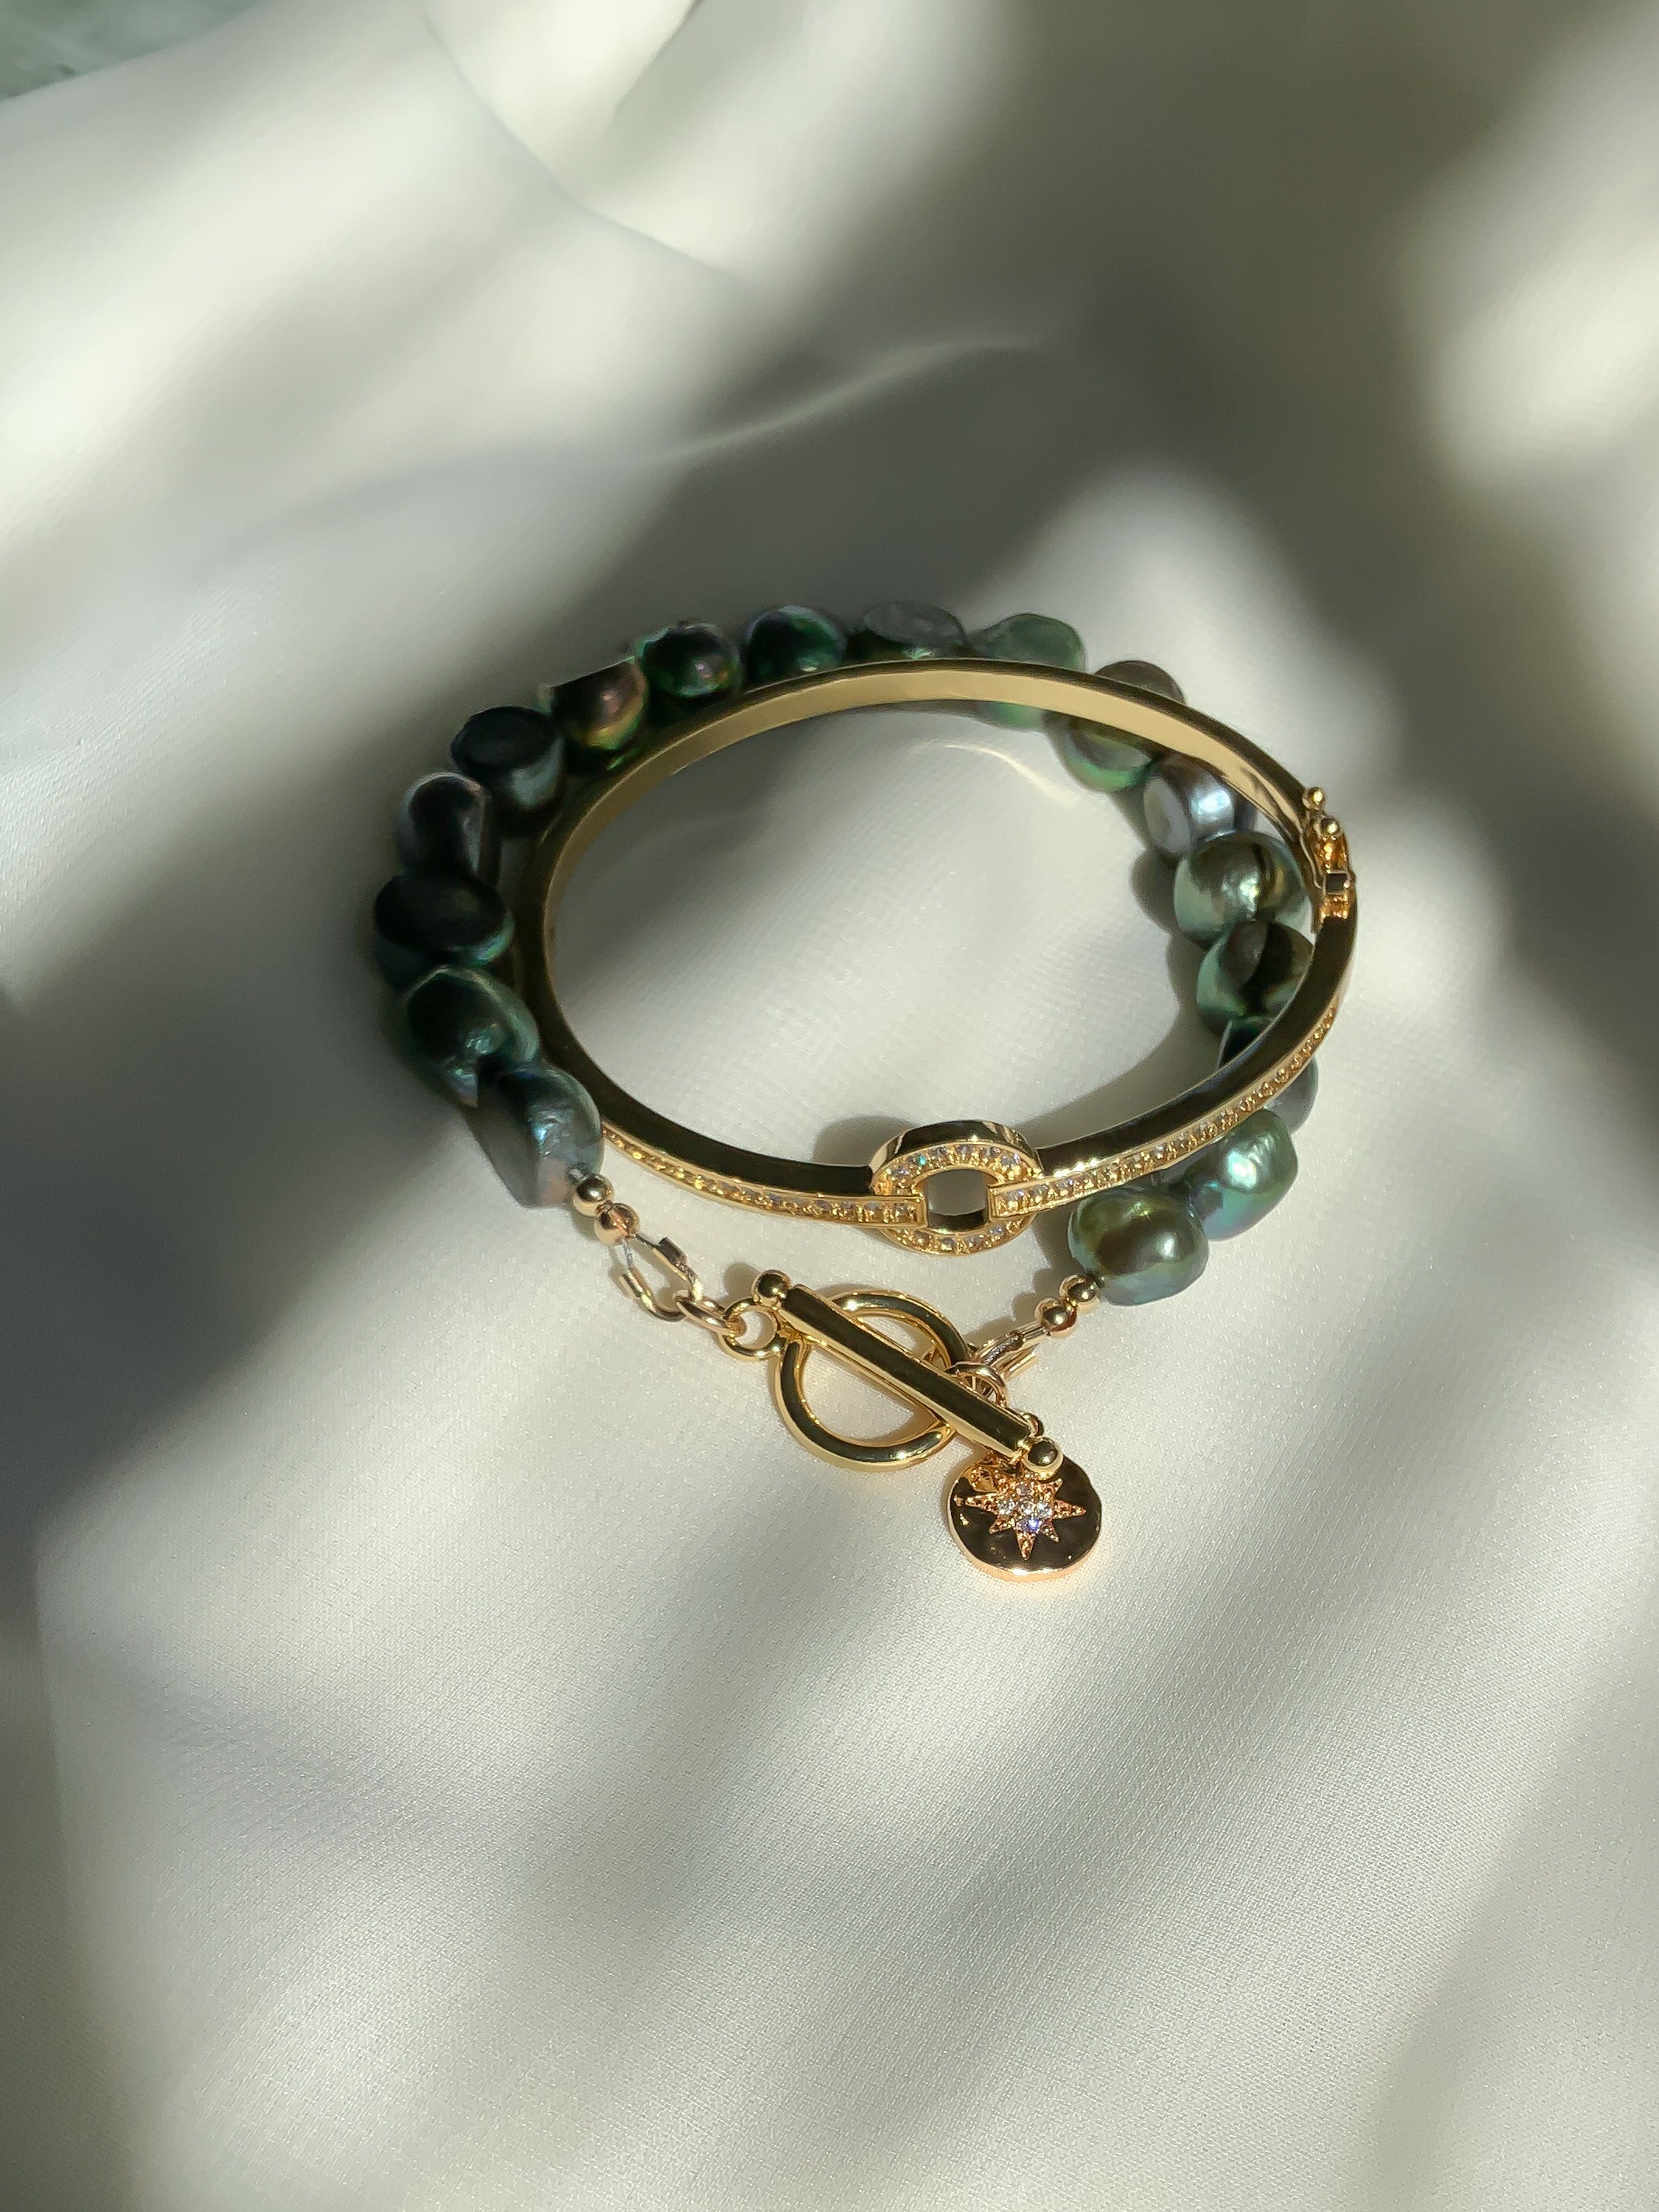 The Aspen Highlands Baroque Pearl Bracelet